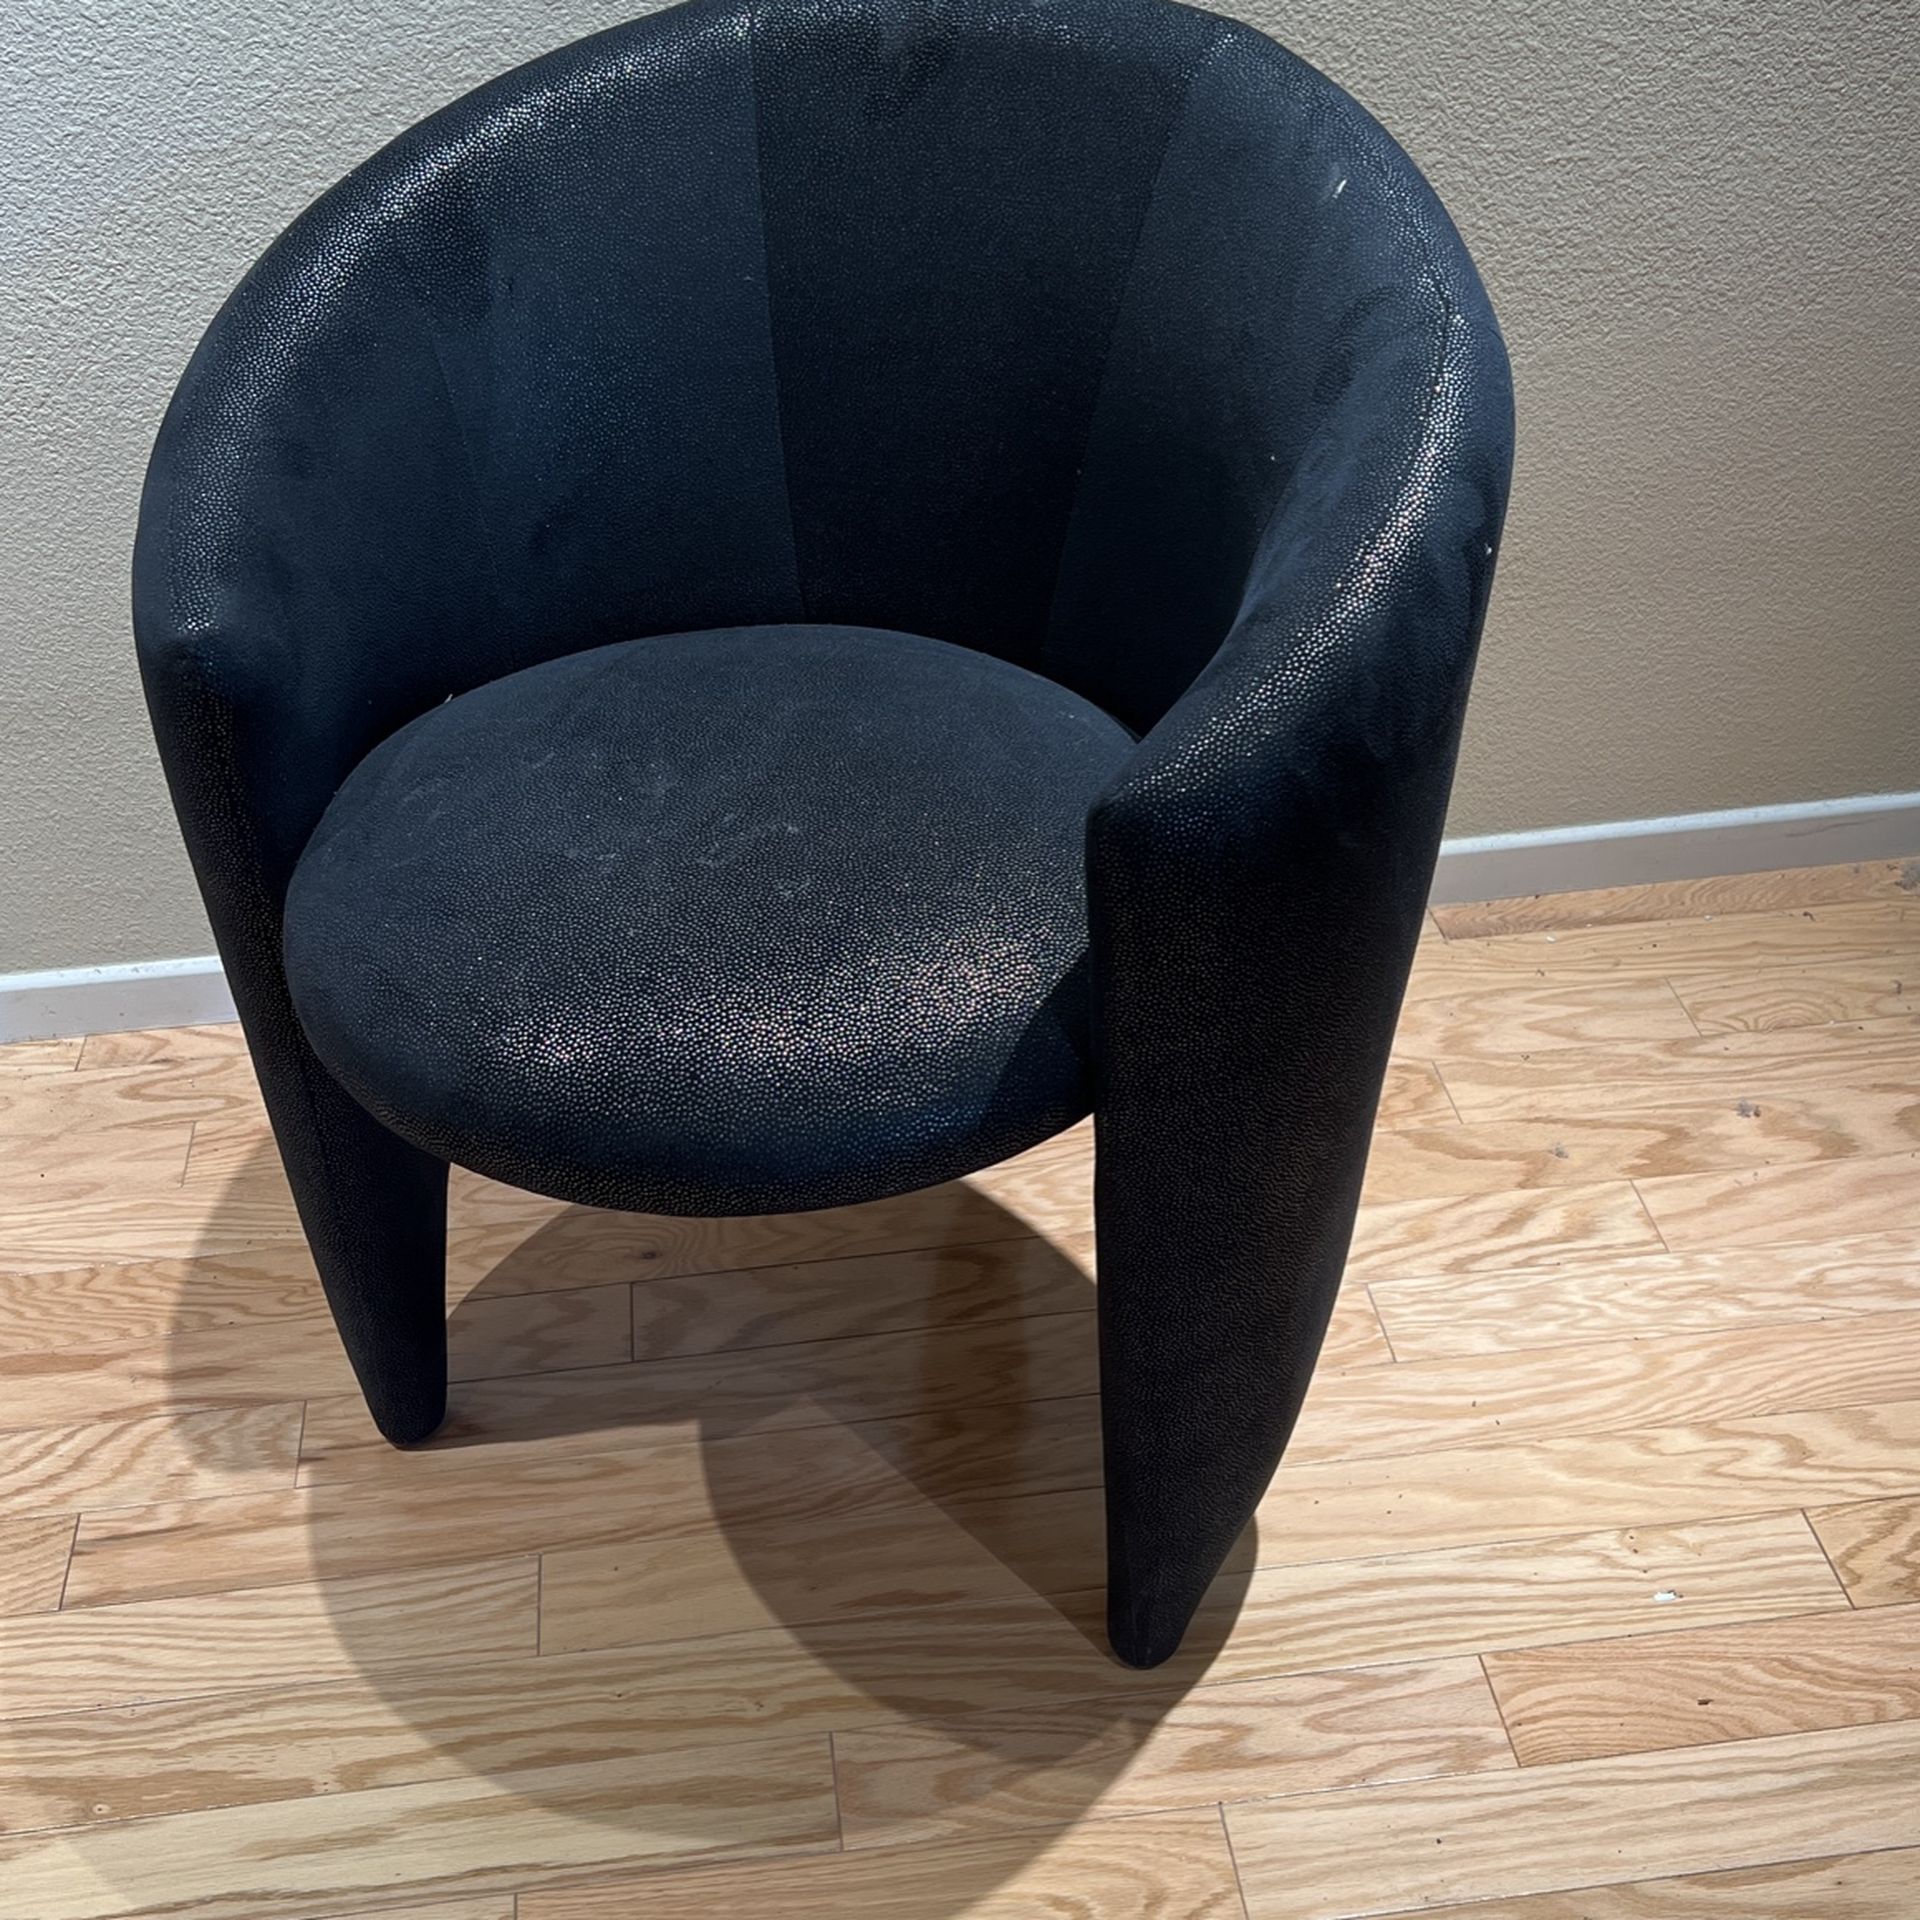 Custom Made Fashion Chair